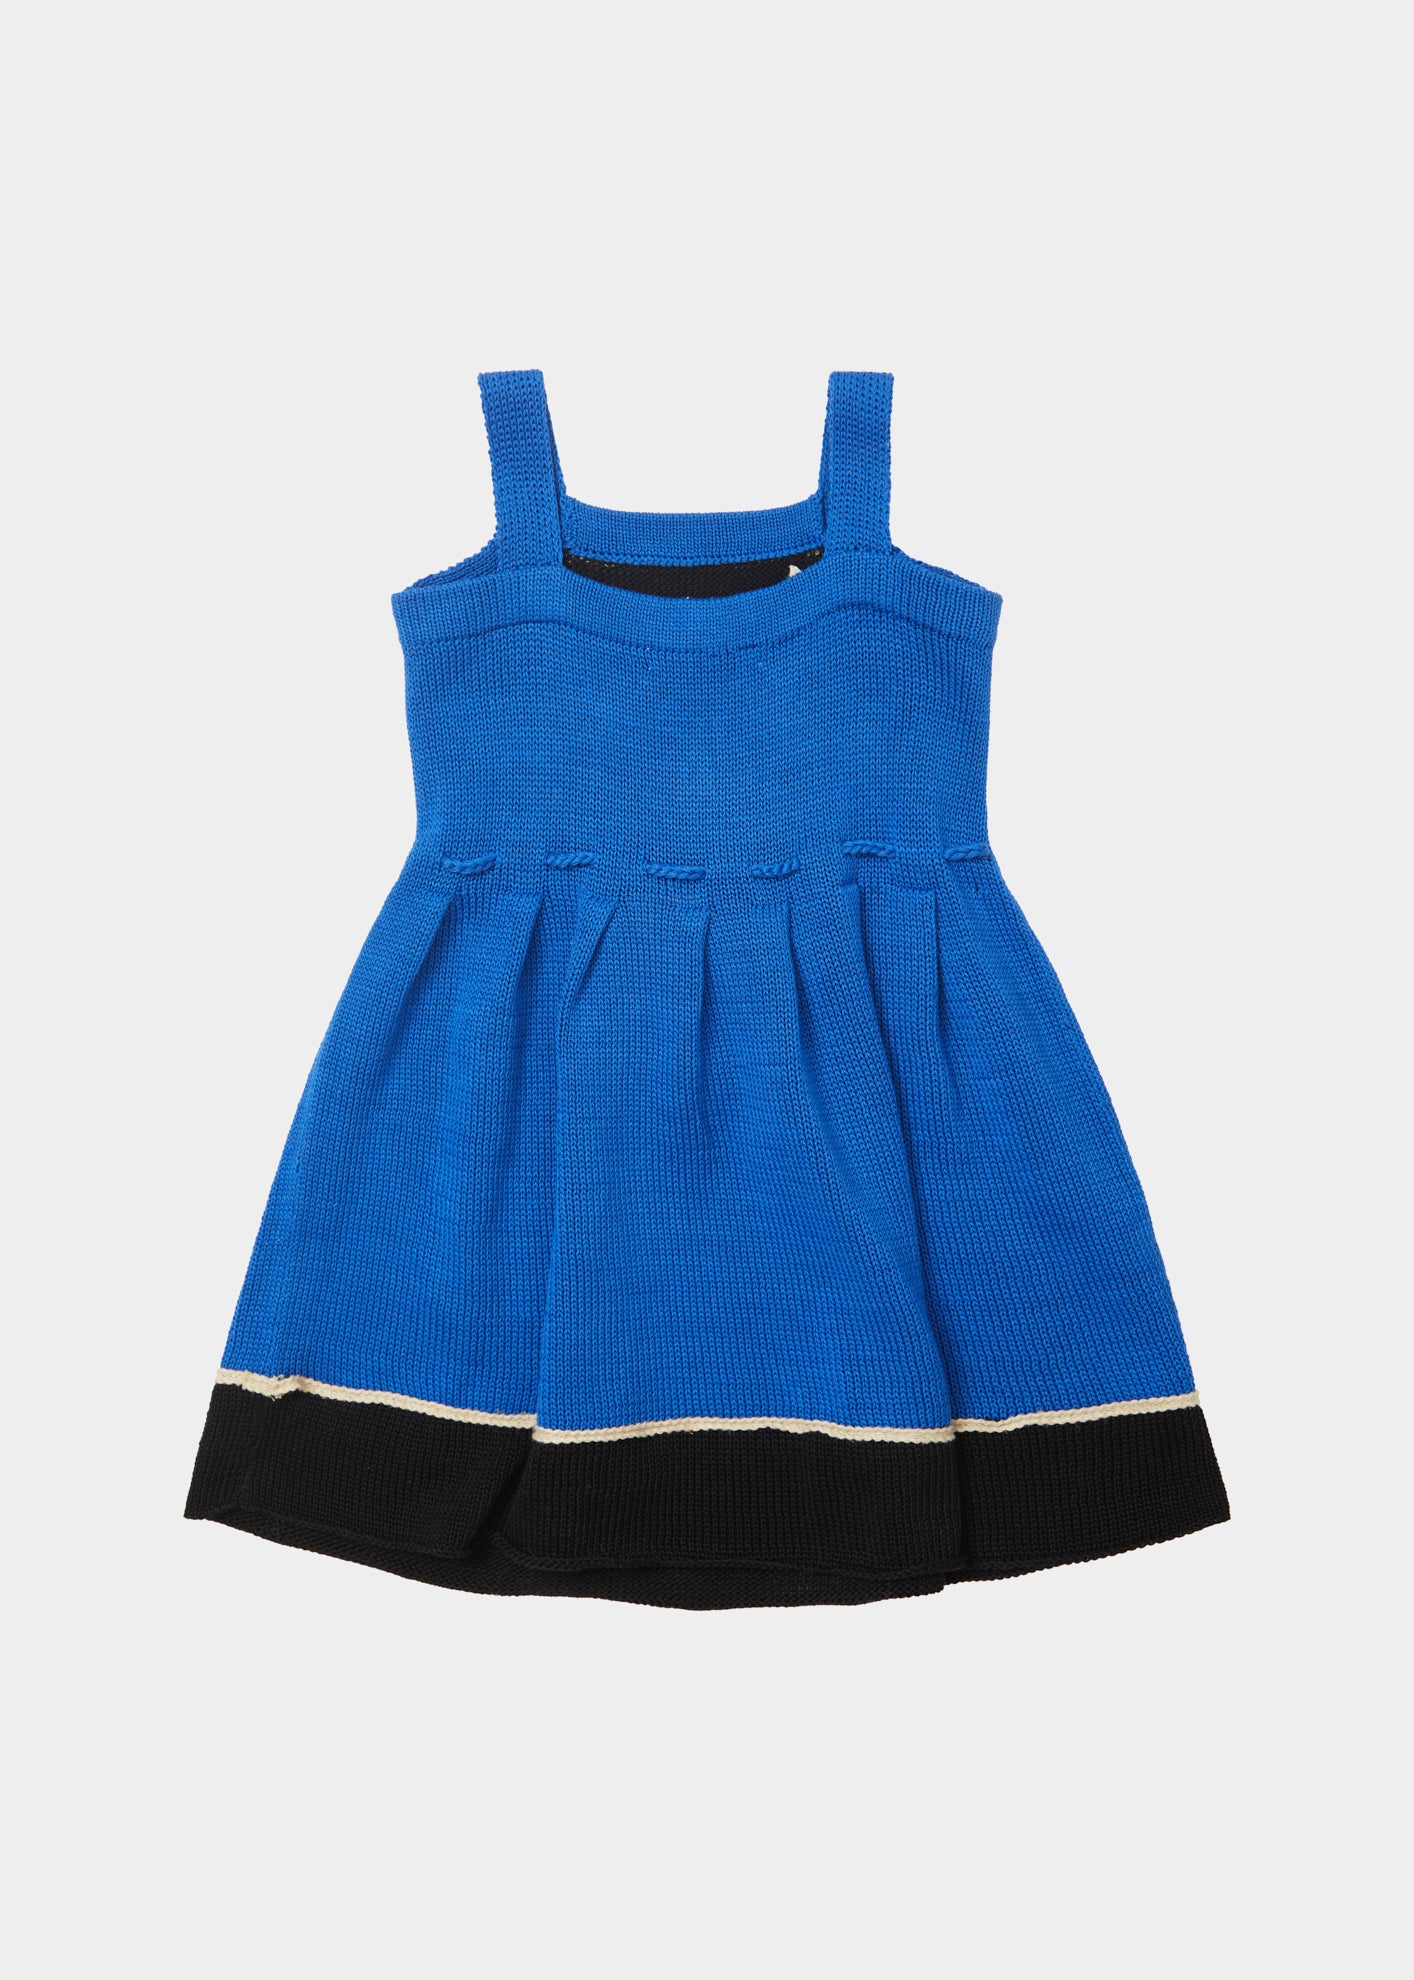 Children Designer Dresses - Azetura Dress - Azure Blue